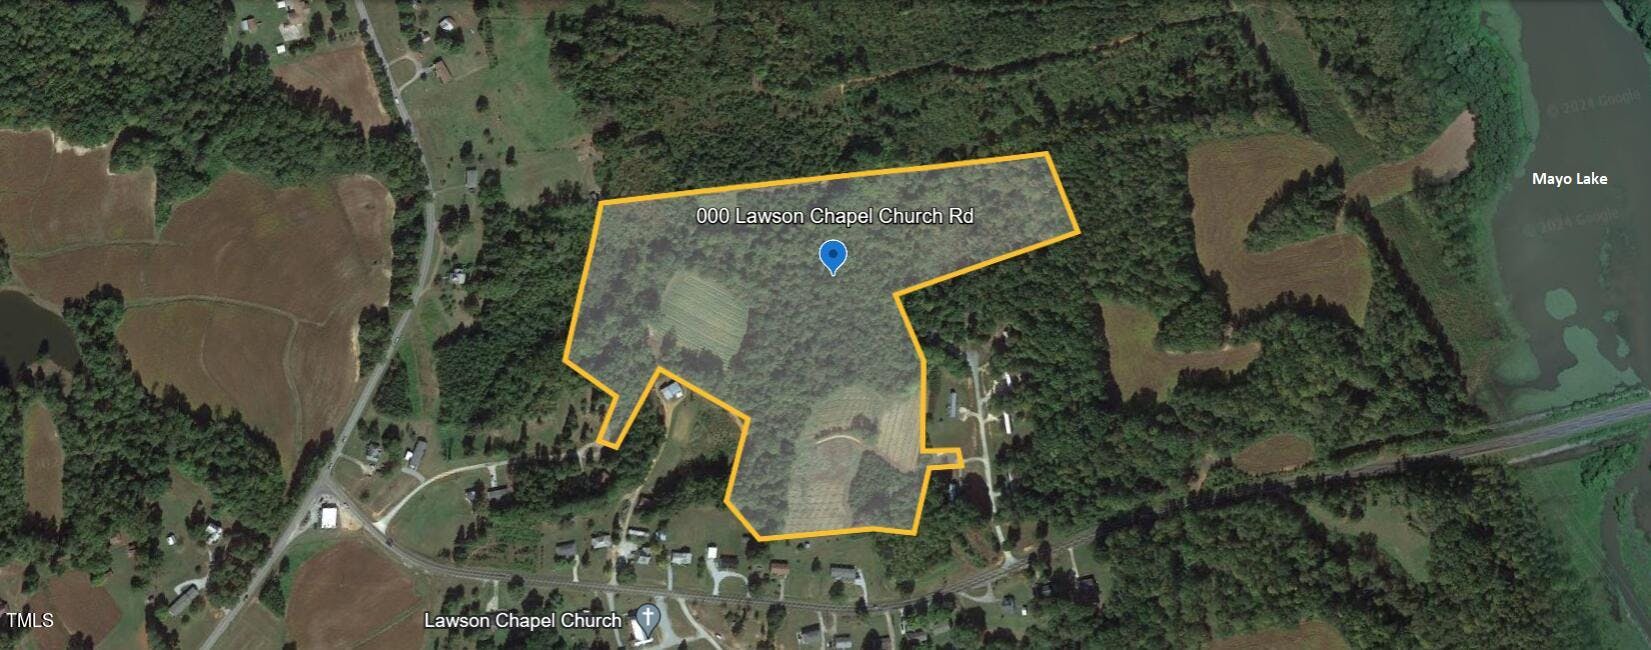 000 Lawson Chapel Church Rd - Google Map